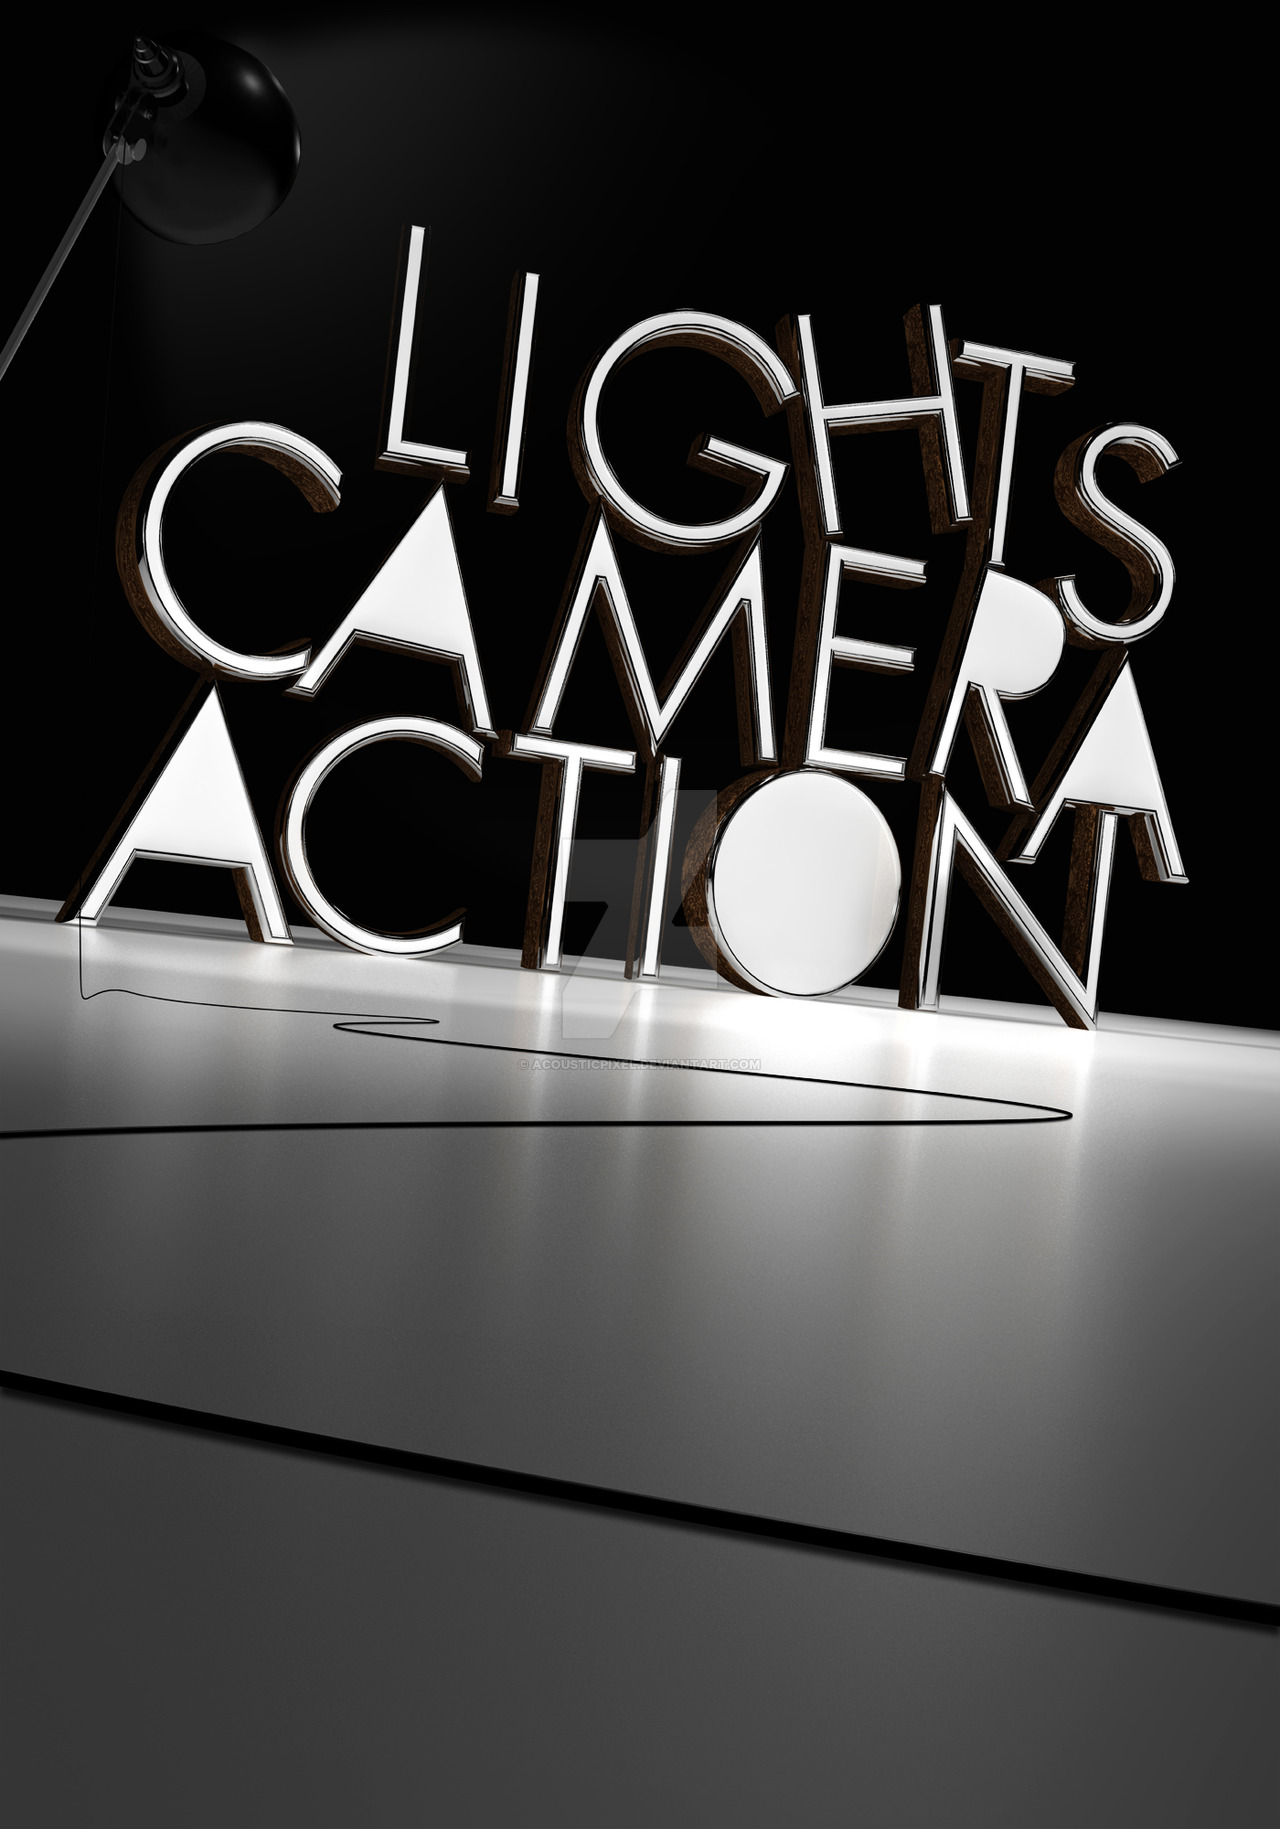 lights camera action background